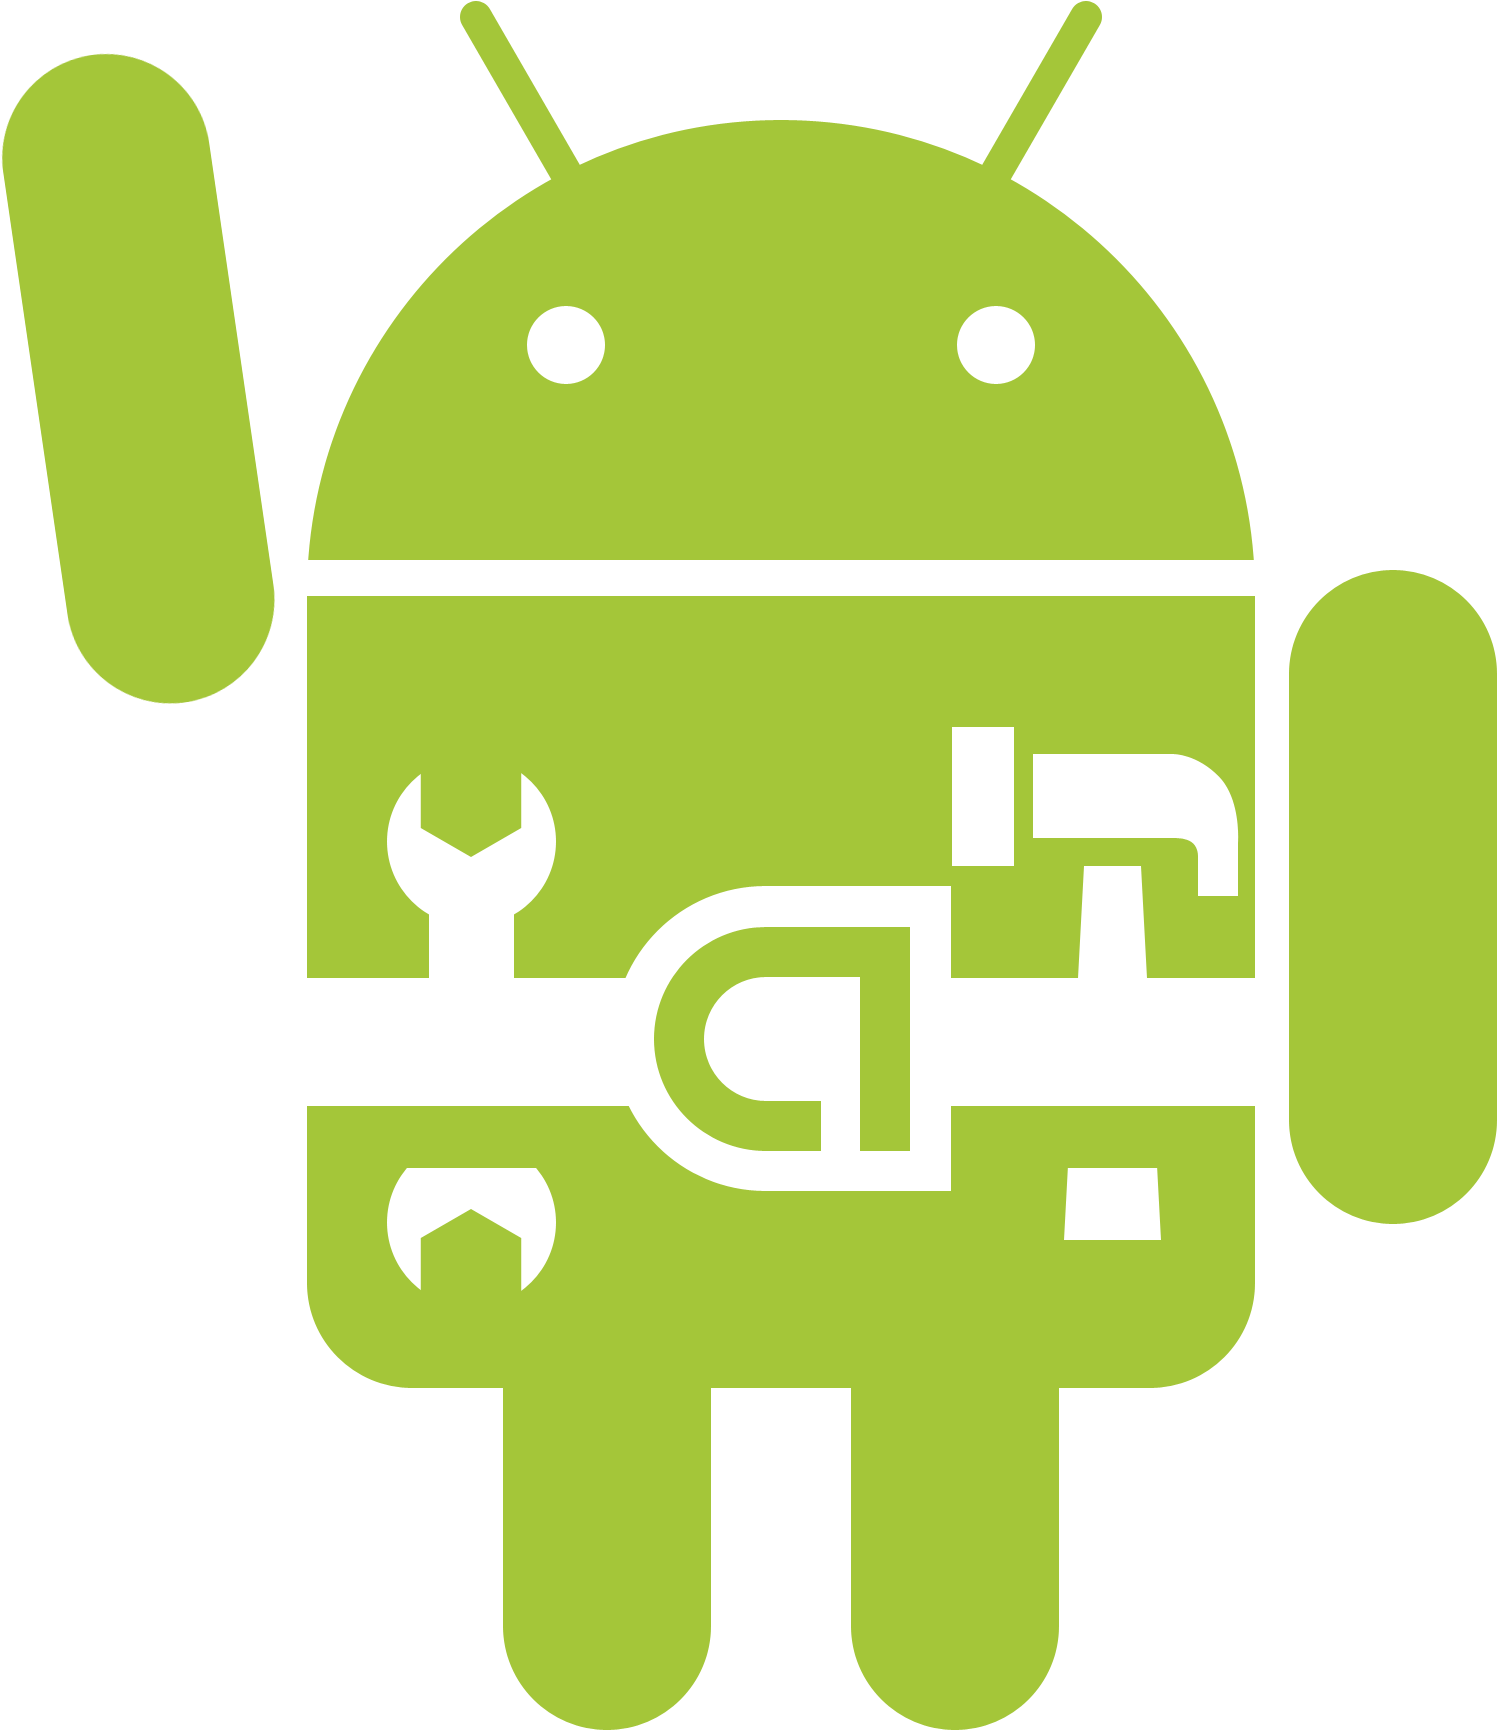 Android programmes. Логотип андроид. Иконка Android. Иконки для приложений Android. Android картинки.